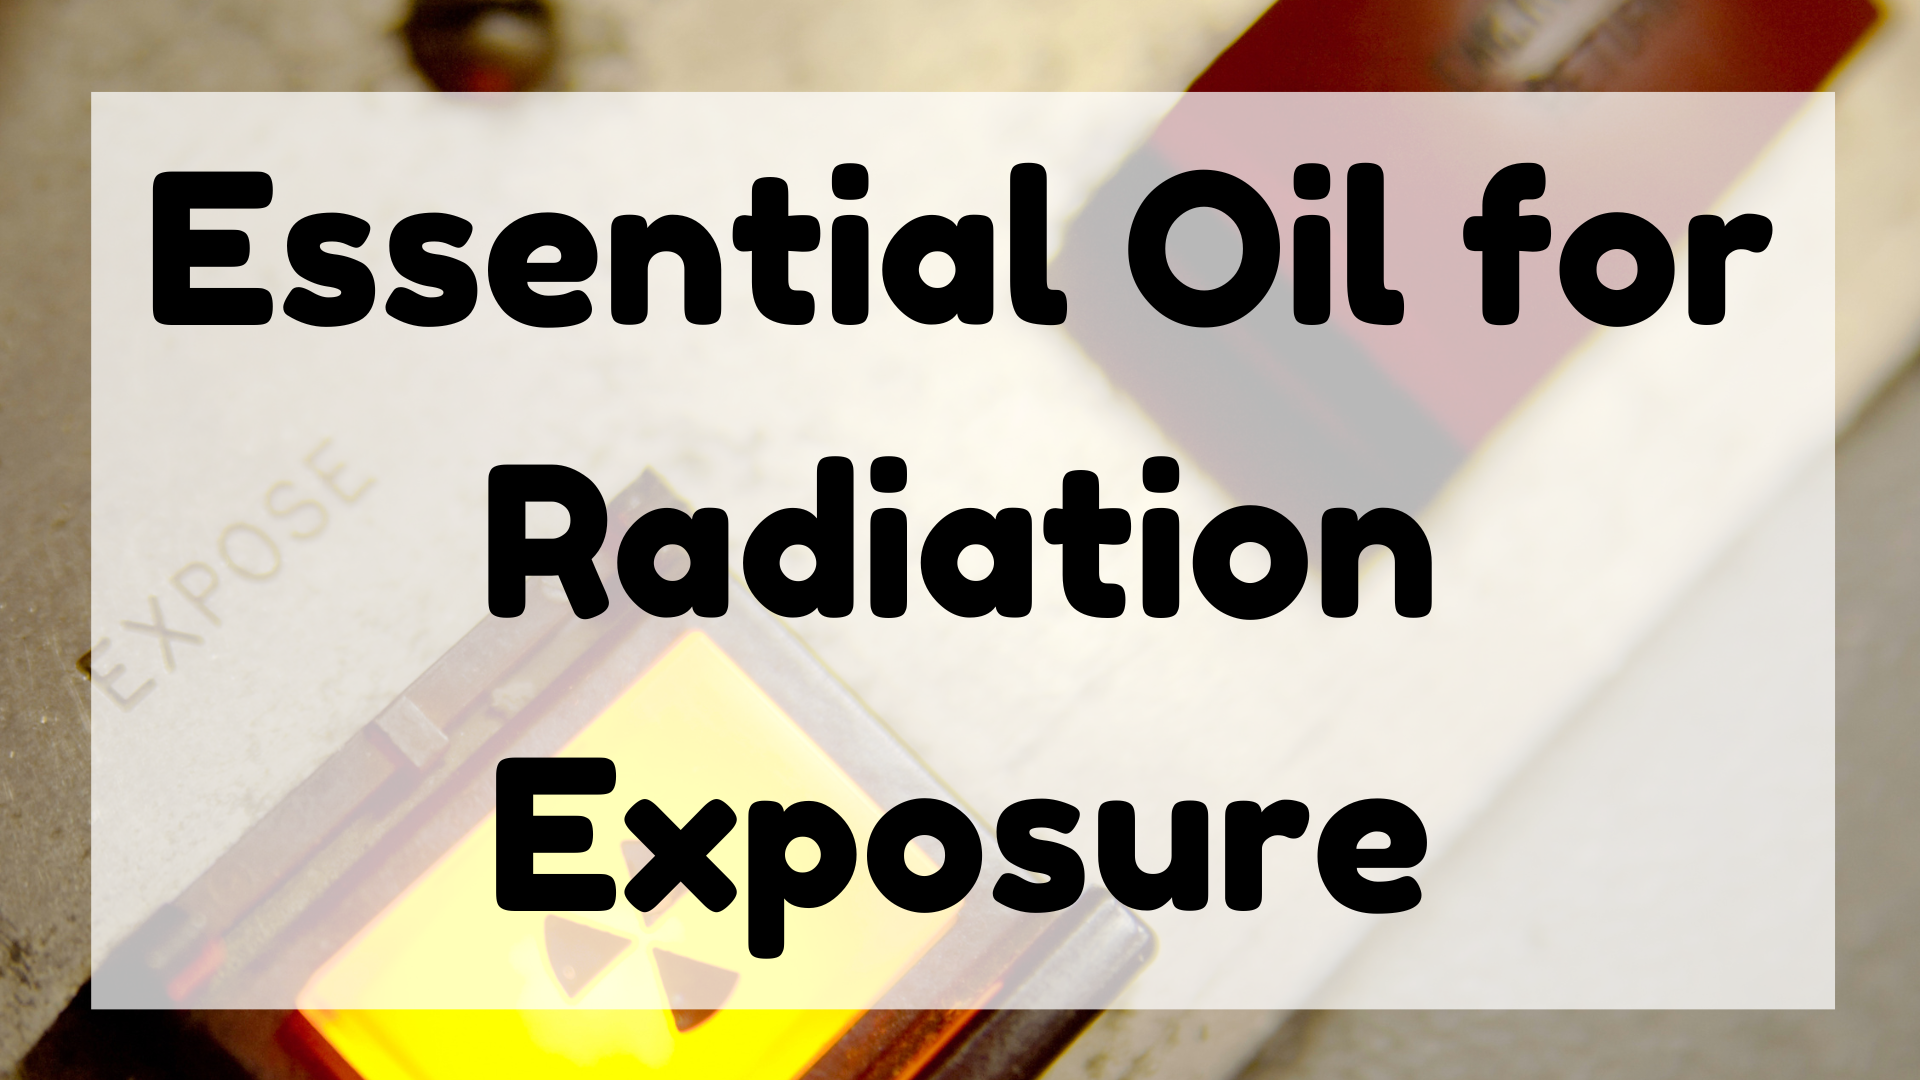 Essential Oil for Radiation Exposure featured image